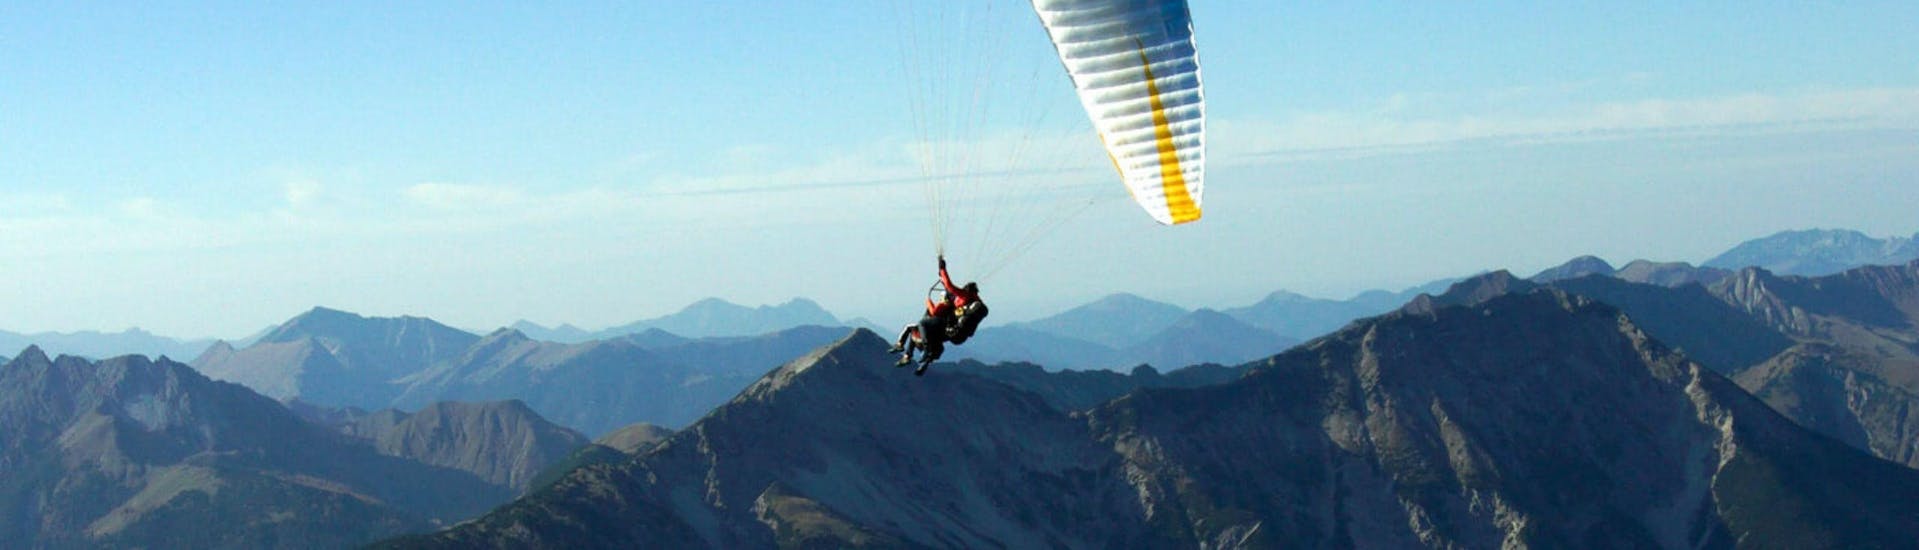 tandem-paragliding-happy-tandem-achensee-hero